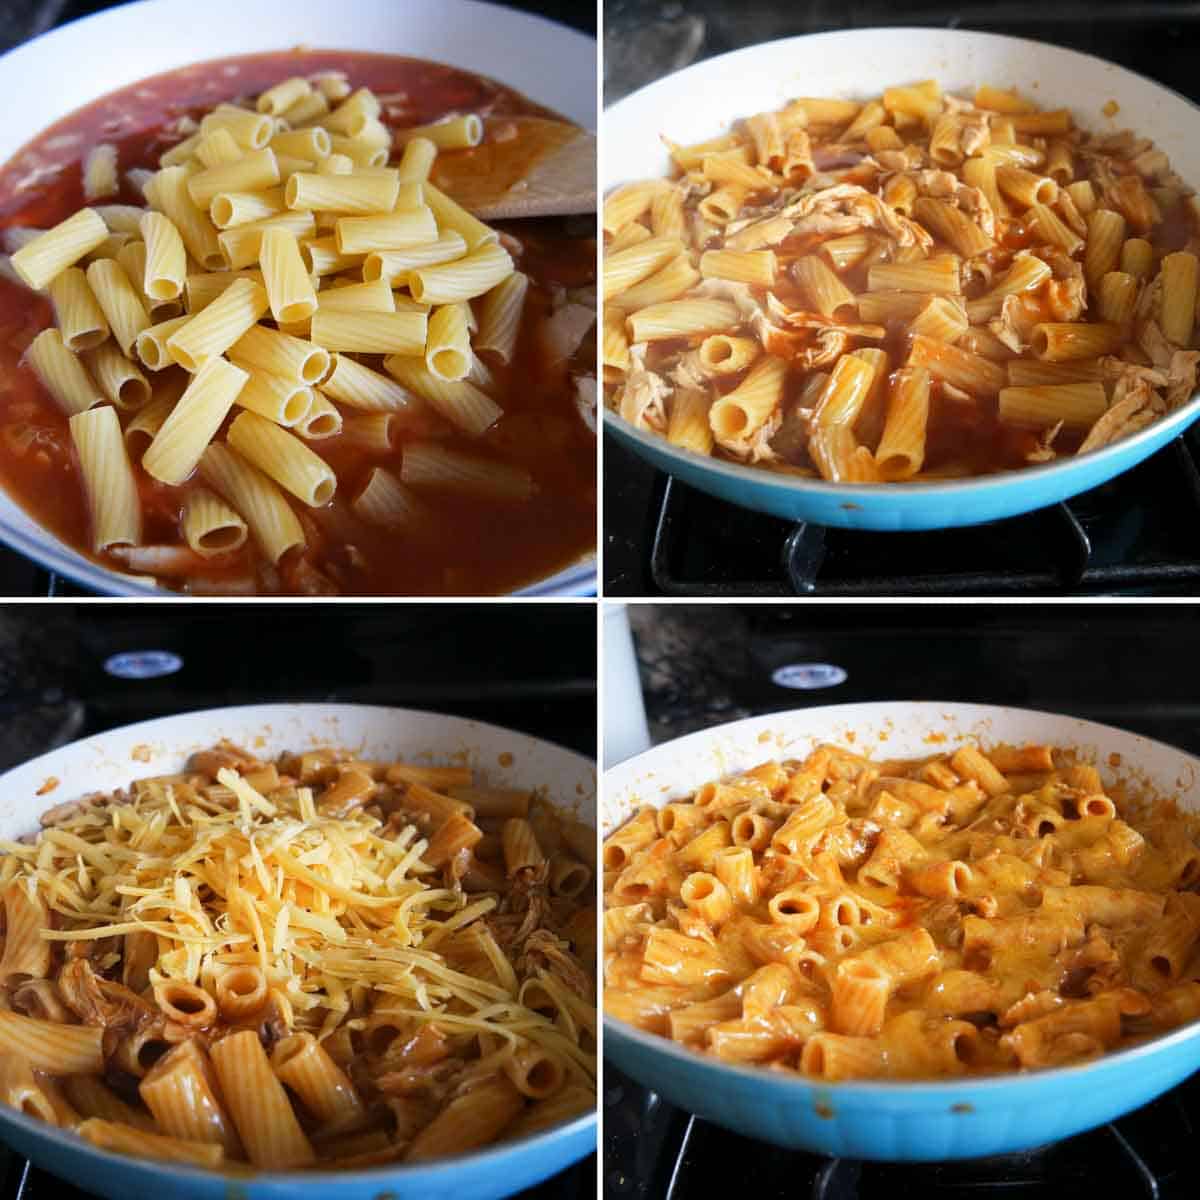 Combining ingredients for enchilada pasta.